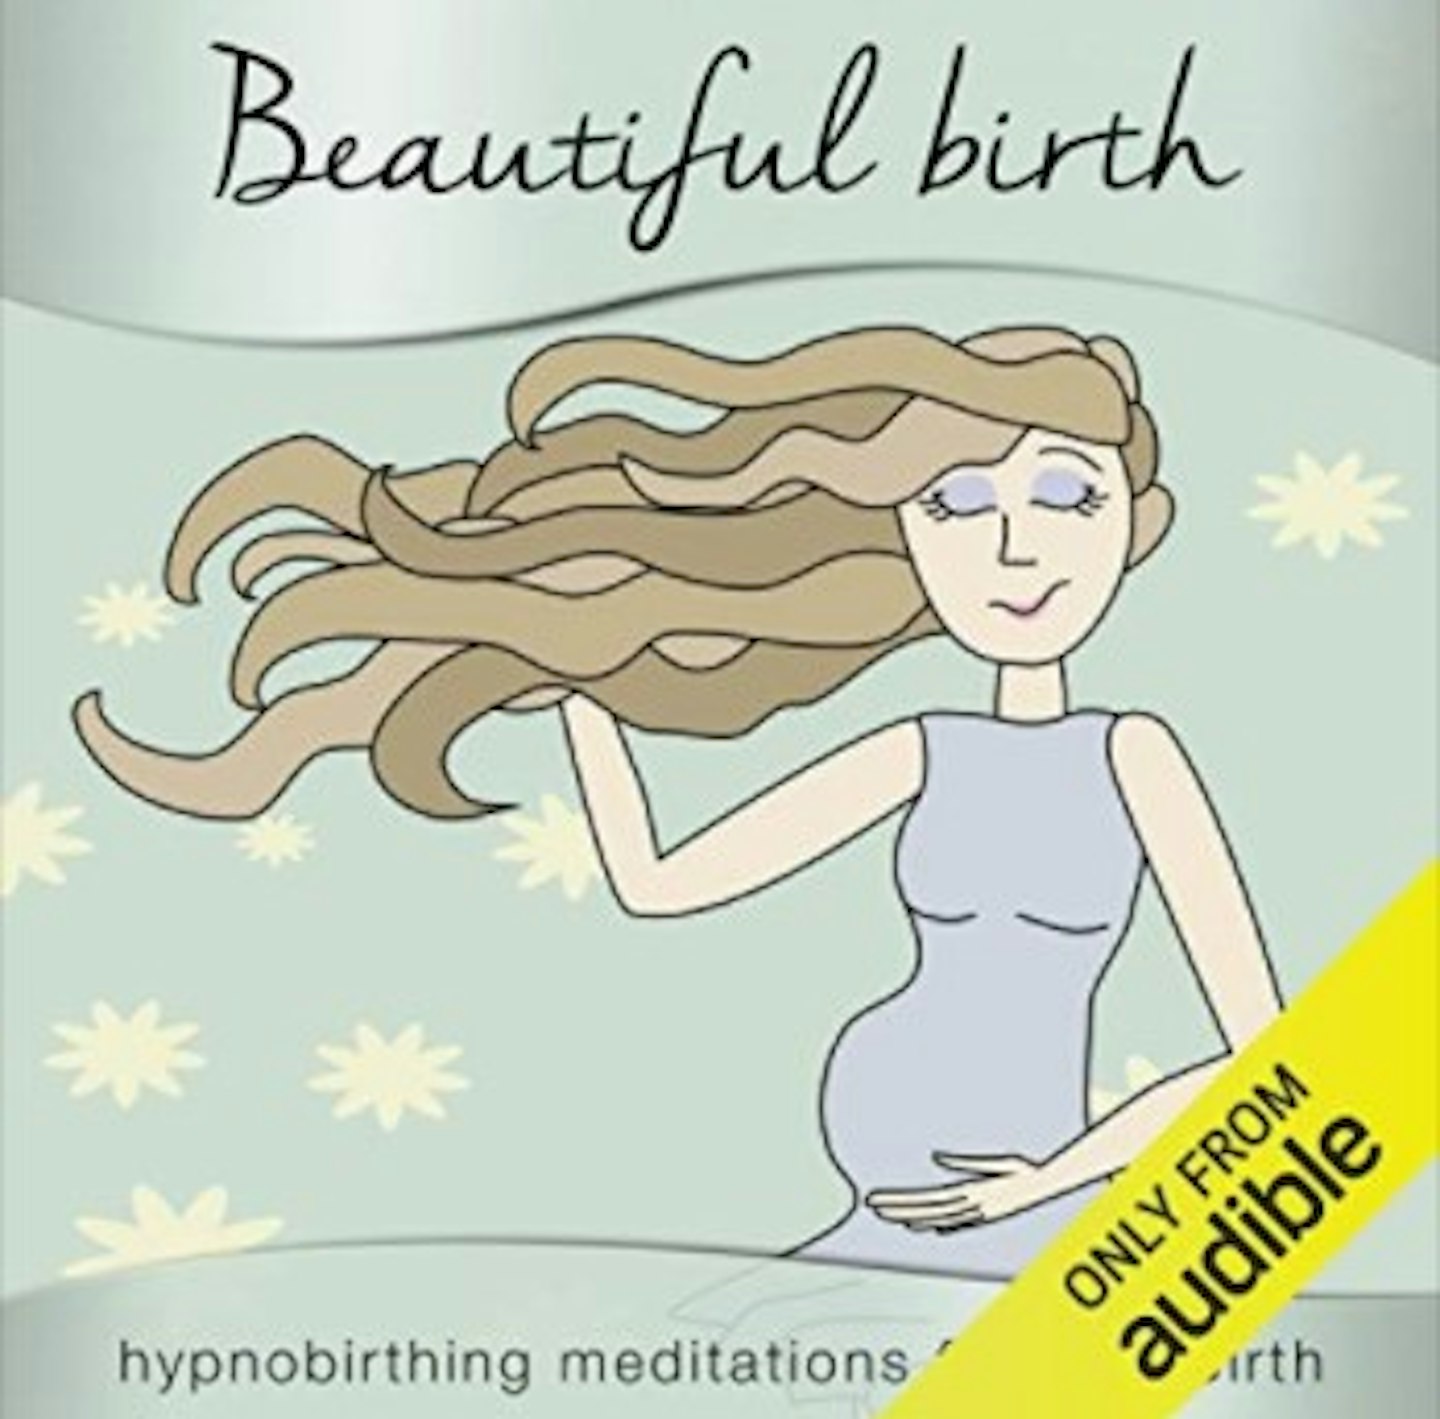 Beautiful Birth: Hypnobirthing Meditations for Childbirth by Samantha Redgrave-Hogg and Nicola Haslett